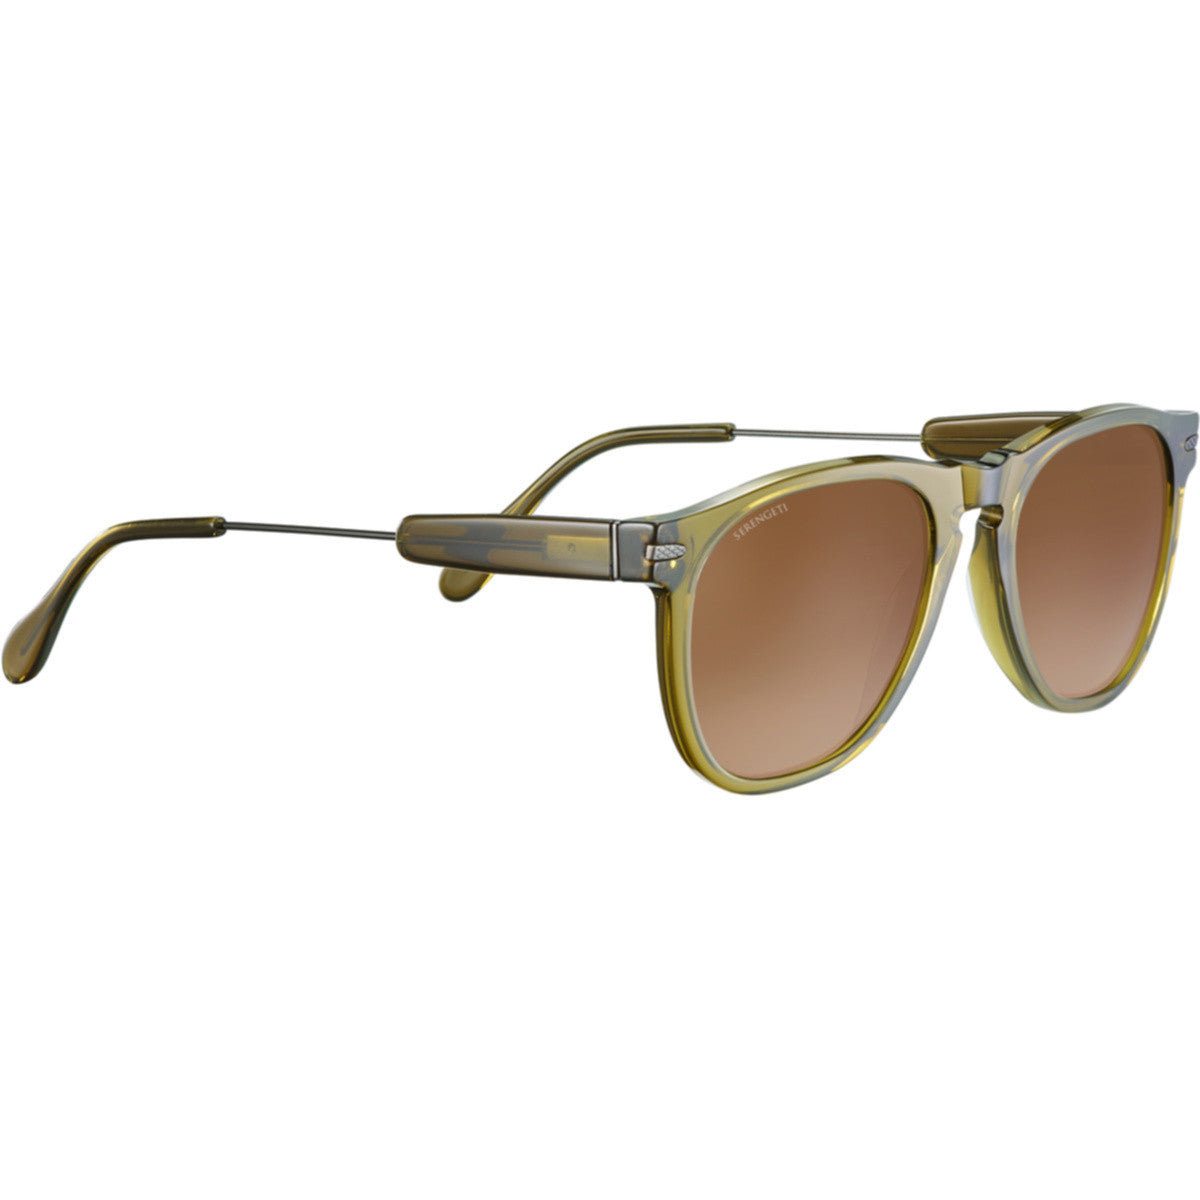 Serengeti Eyewear Brera - Best Price and Available as Prescription  Sunglasses